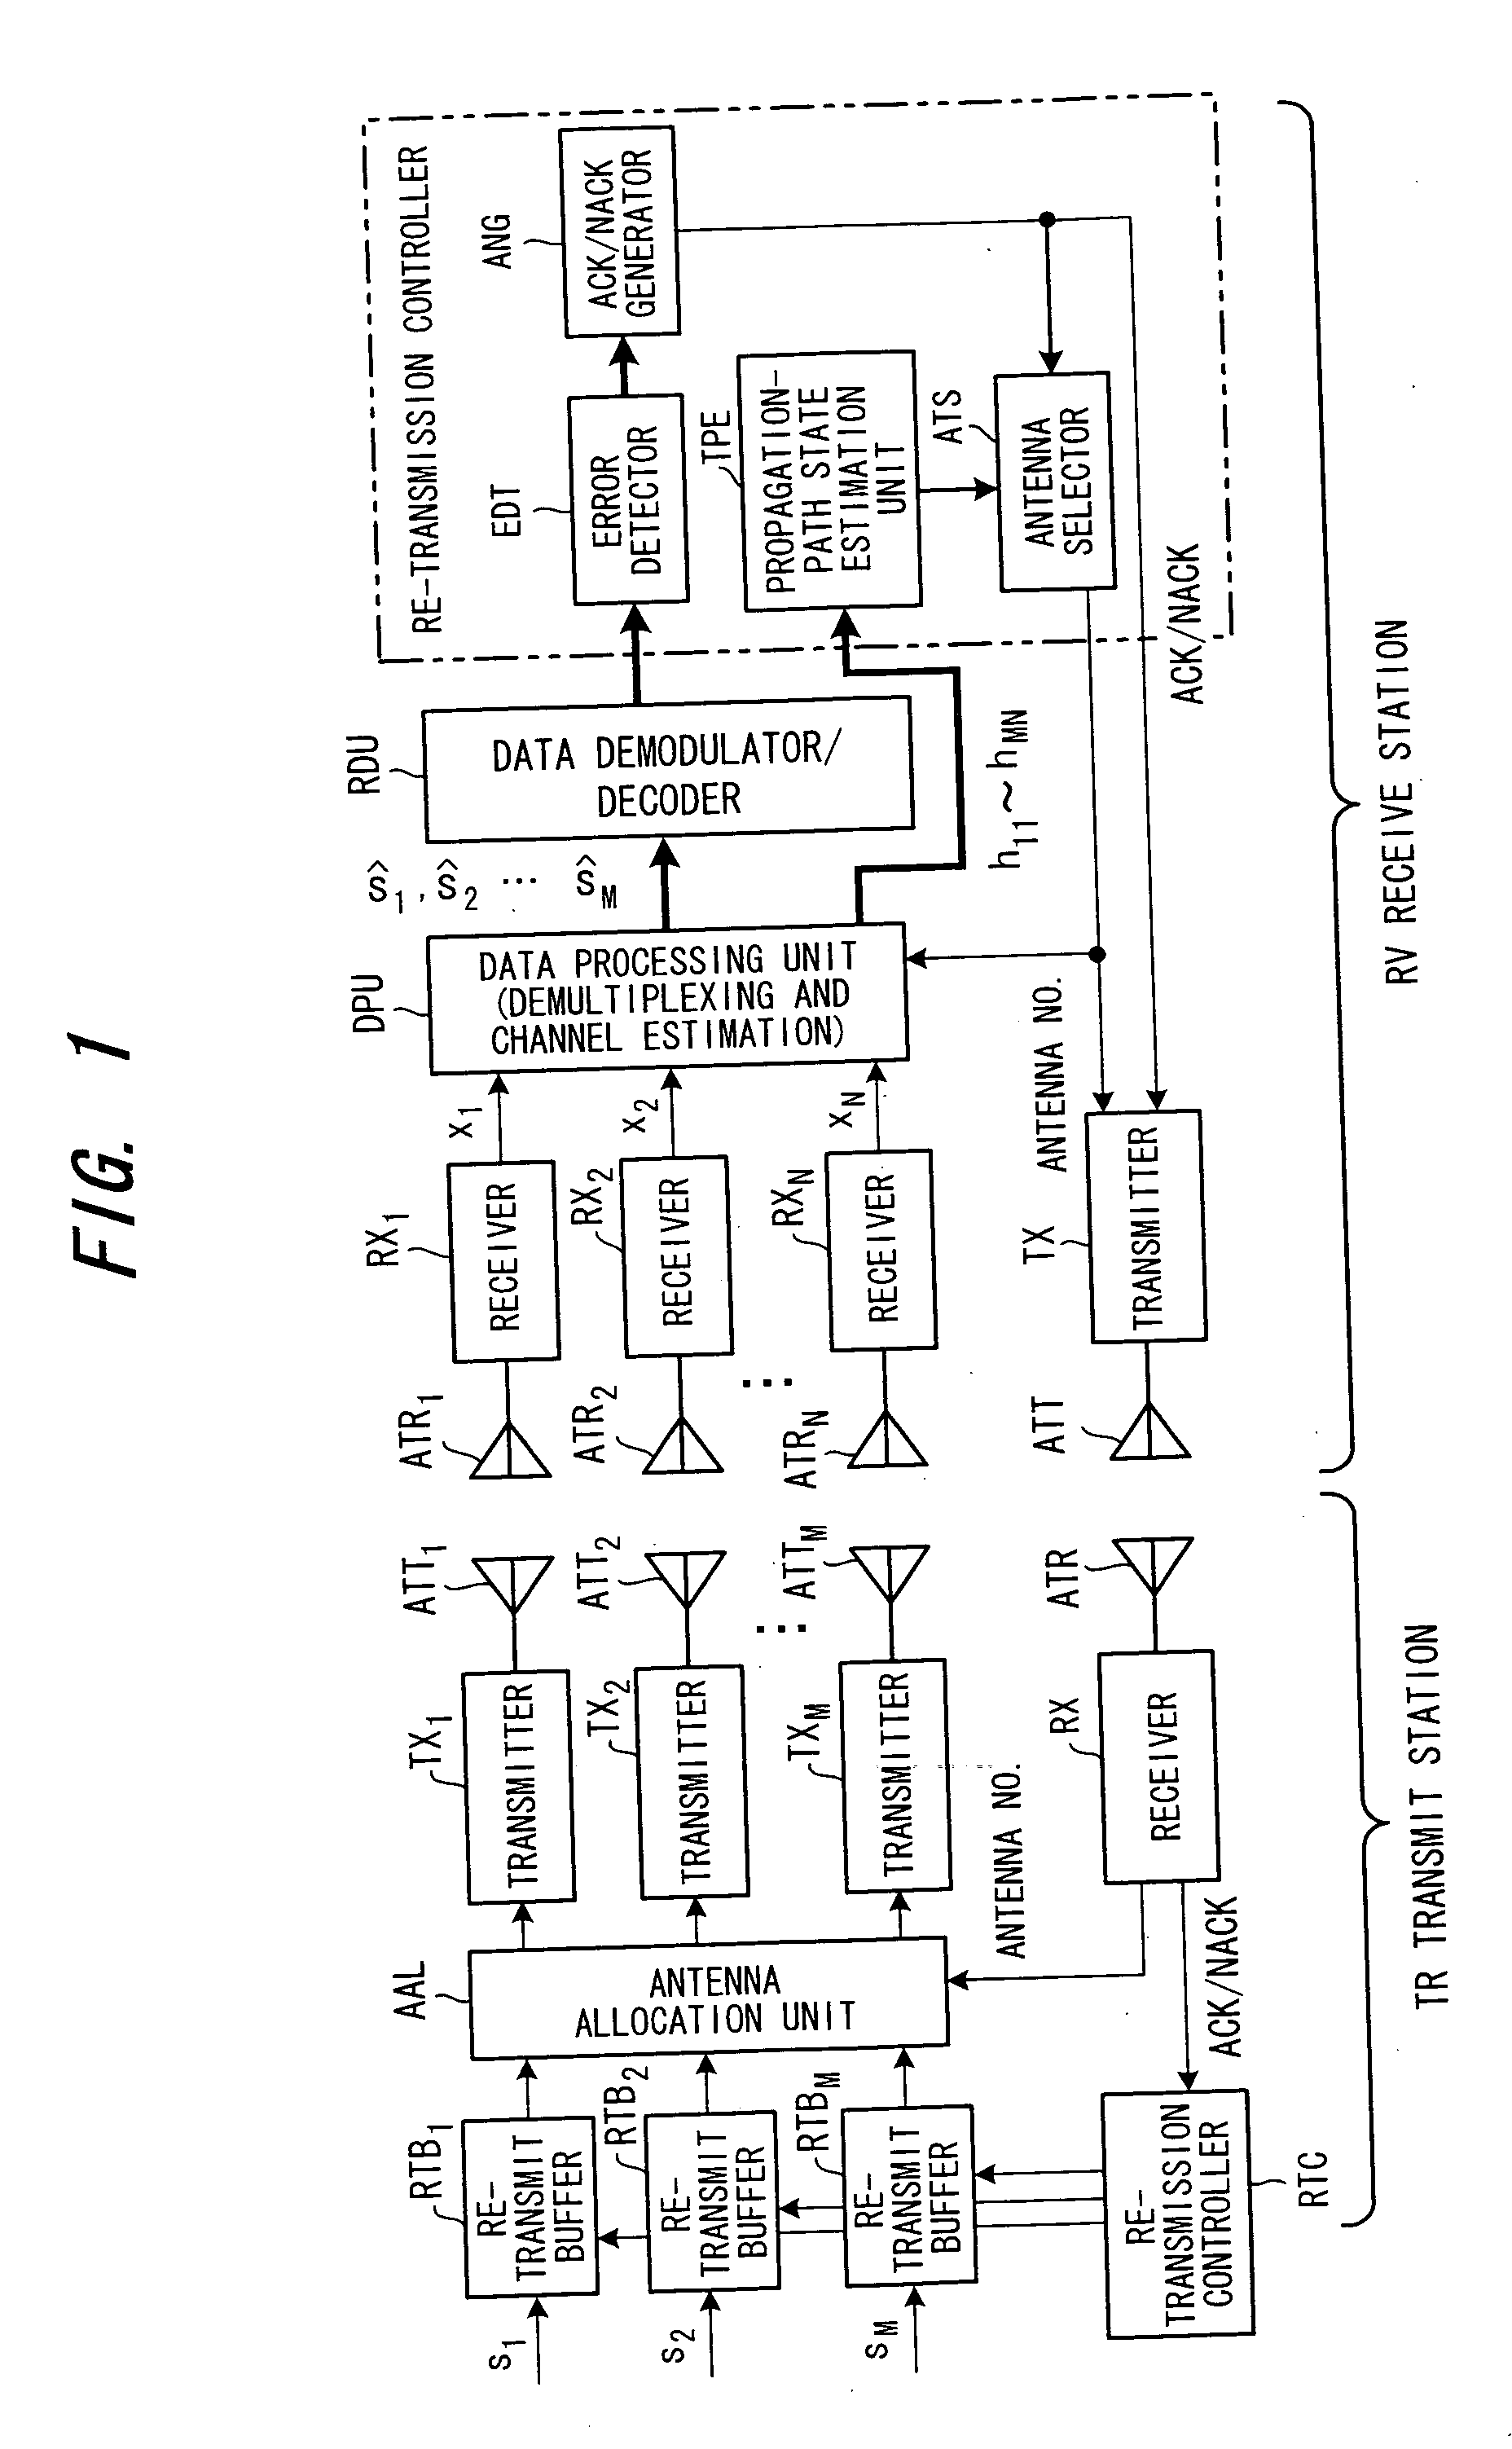 Multiple-input multiple-output transmission system